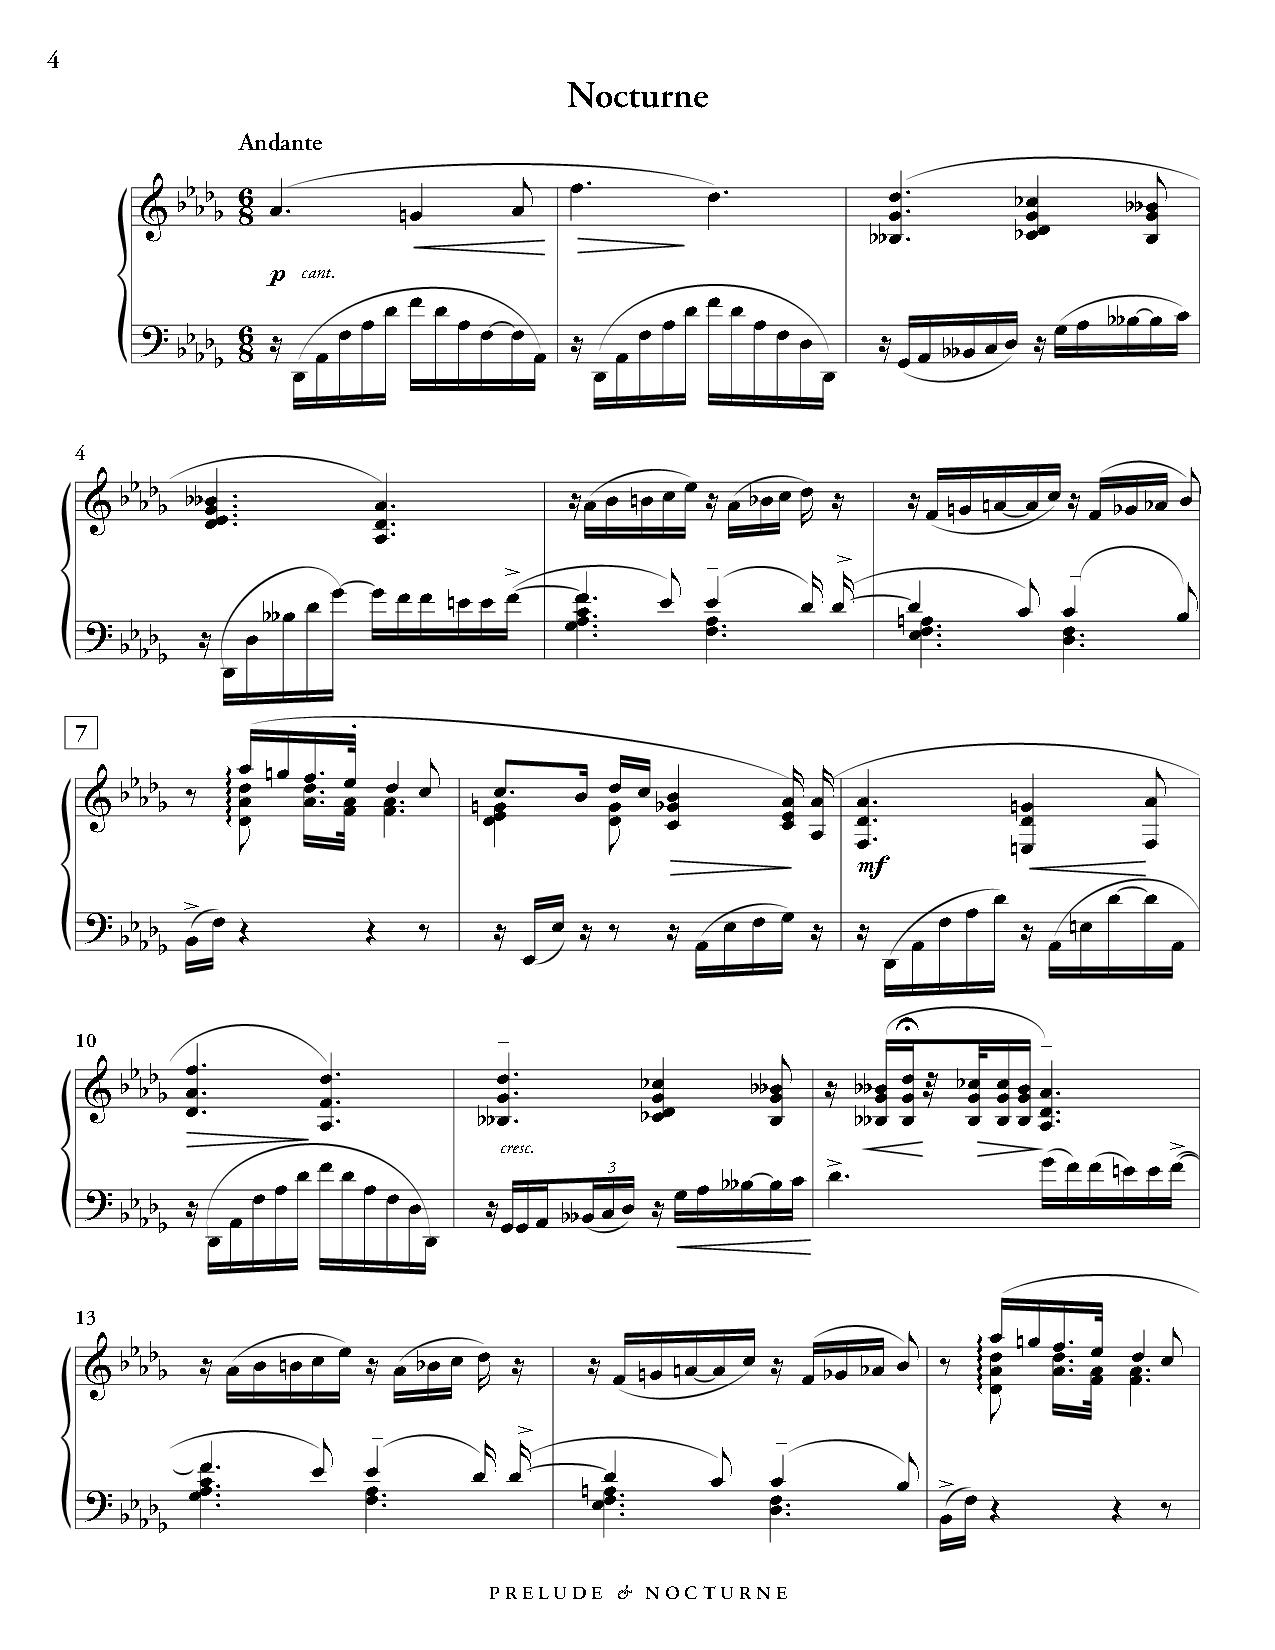 Prelude & Nocturne, Op. 9, #1 Marimba Solo